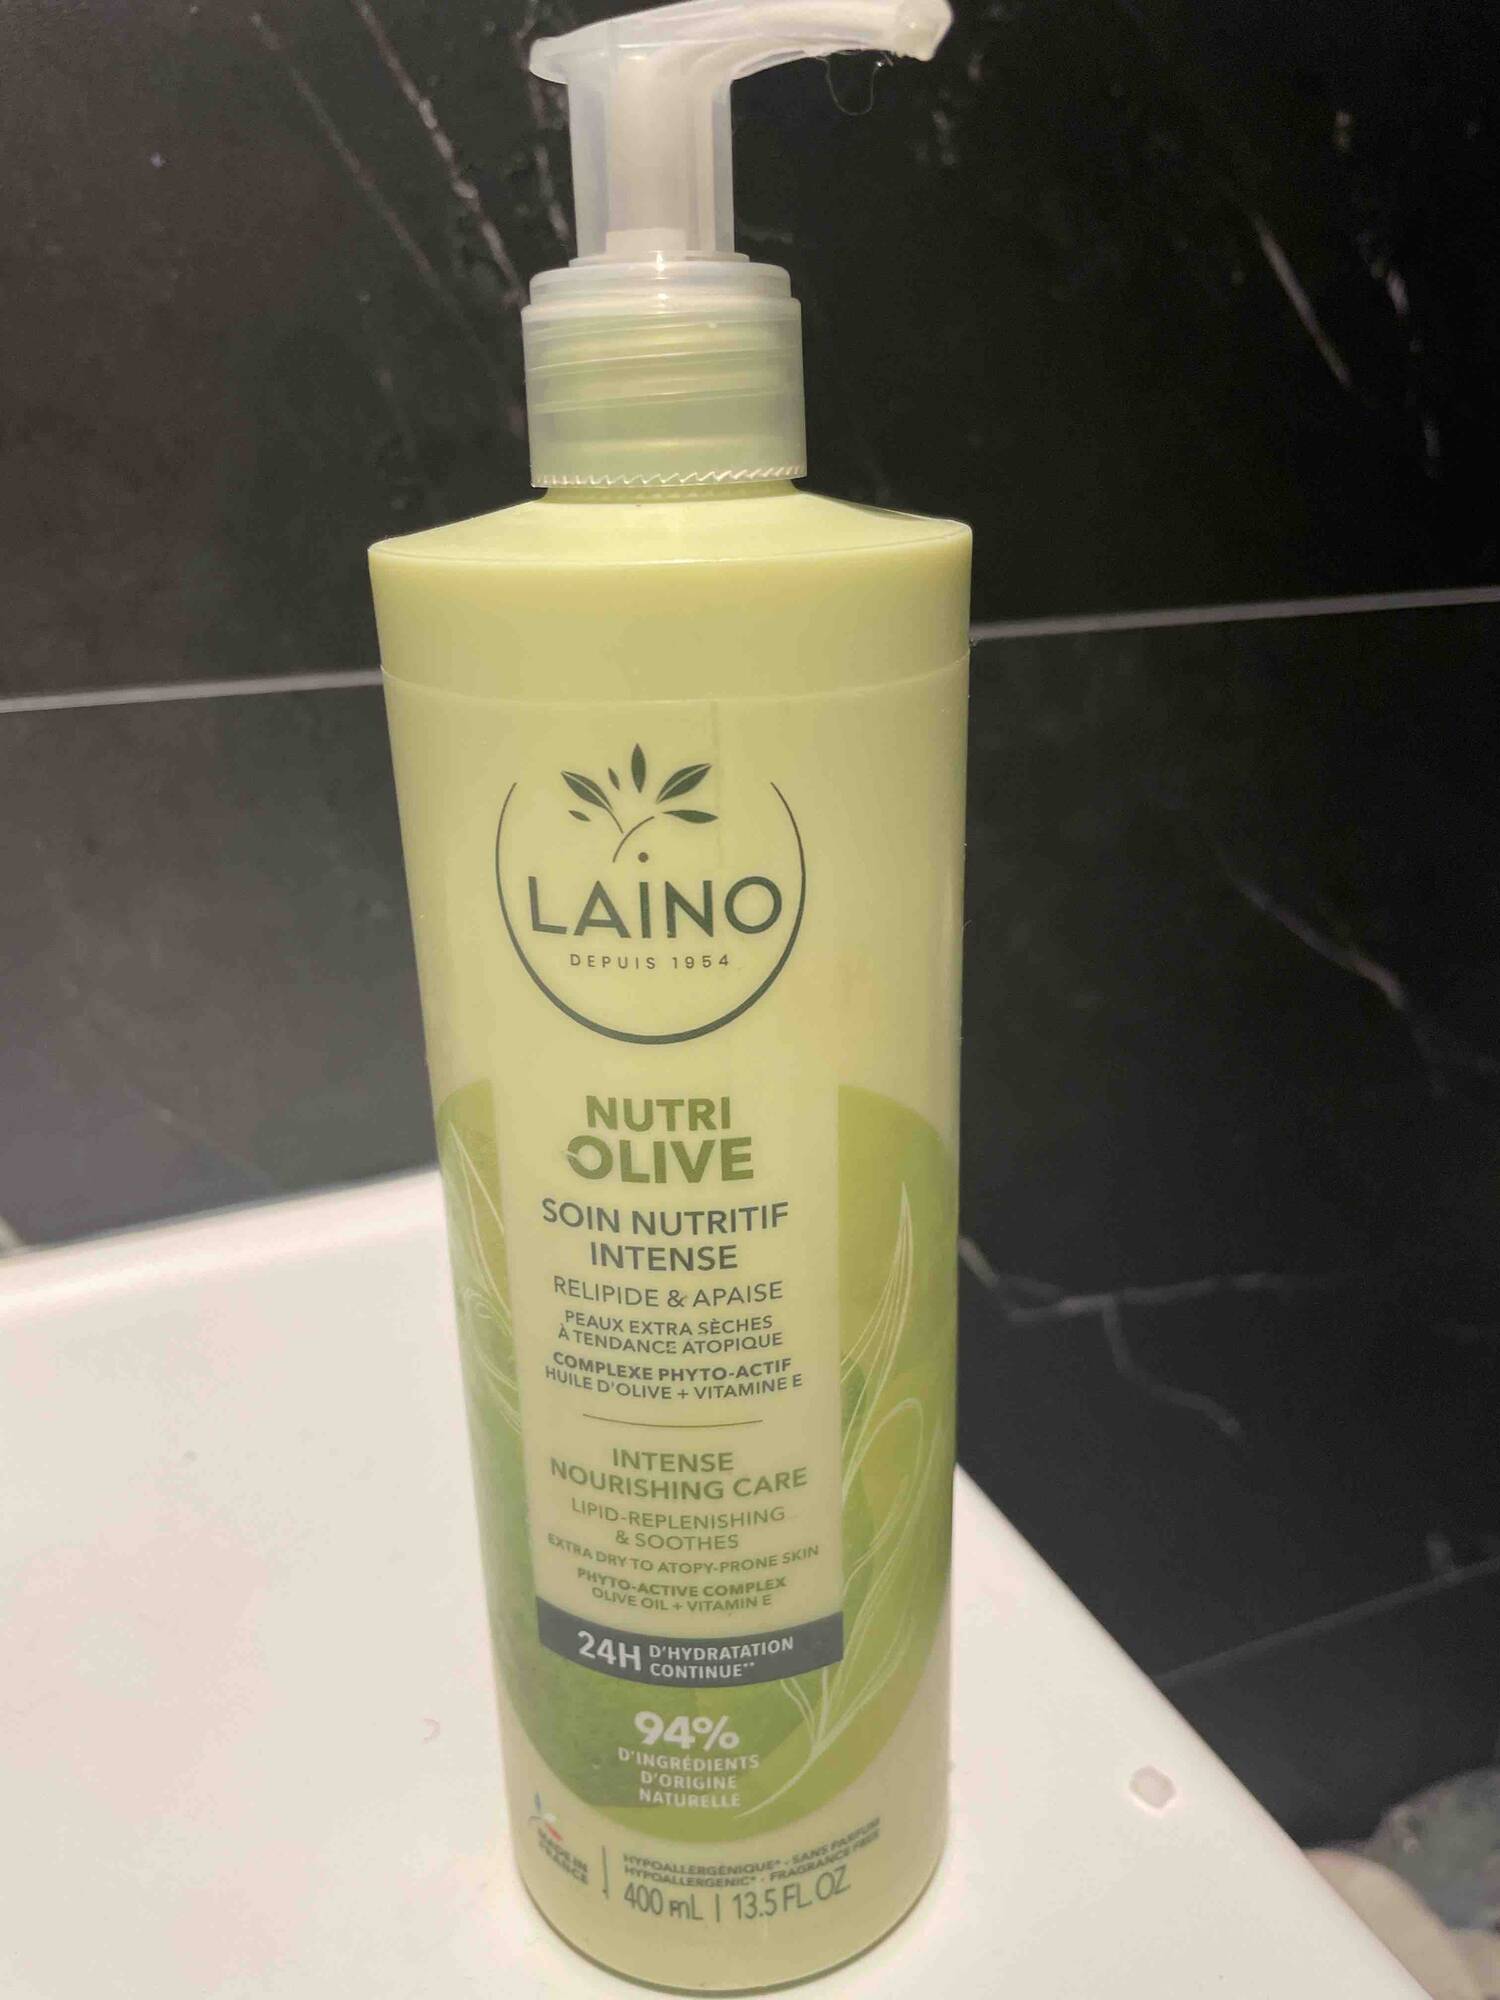 LAINO - Nutri olive - Soin nutritif intense 24h